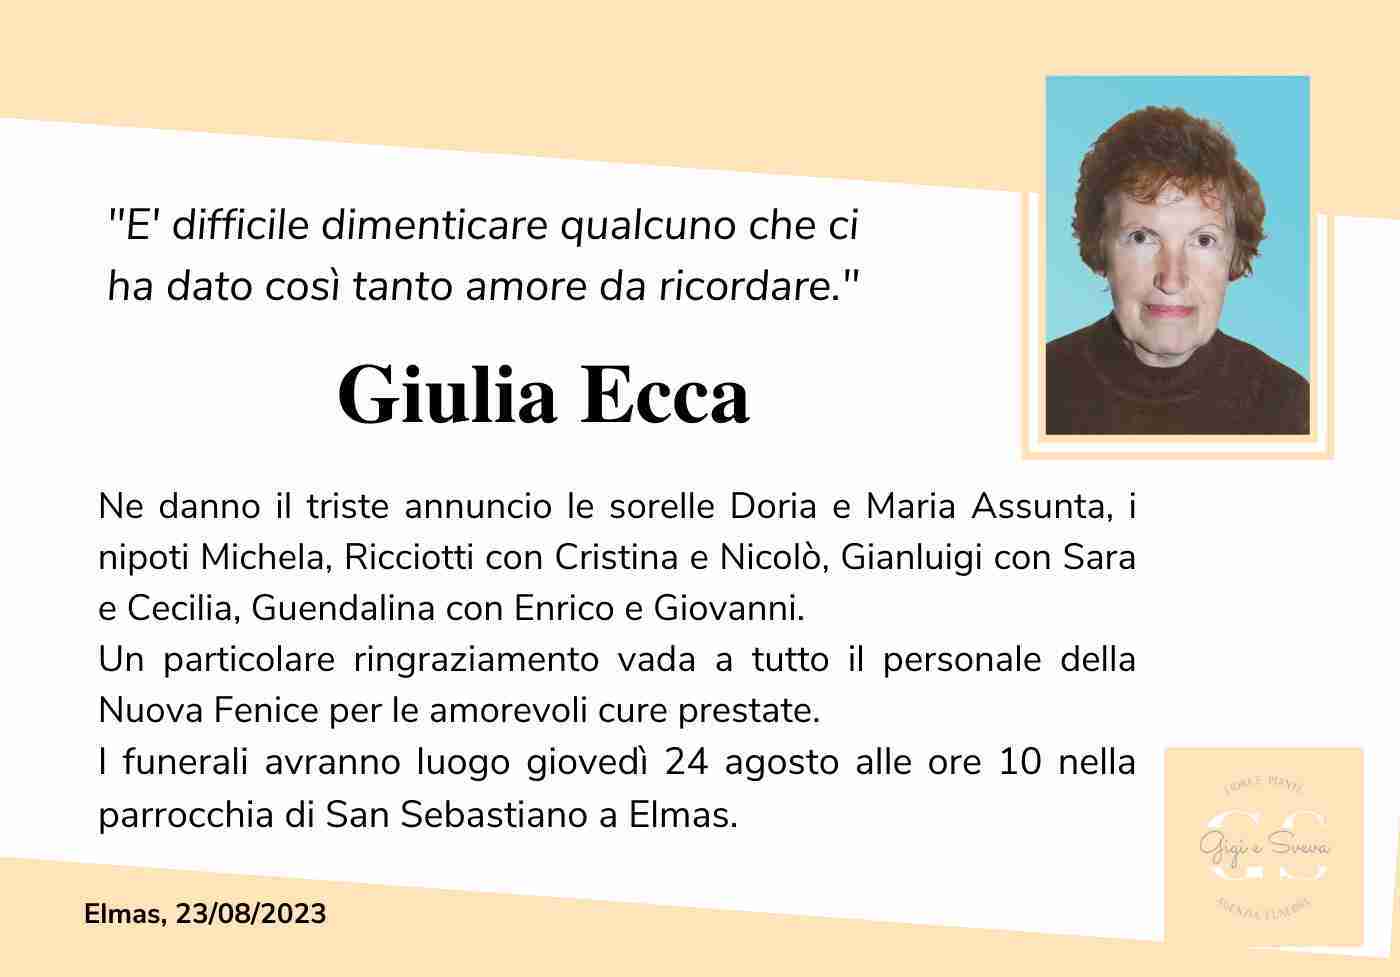 Giulia Ecca